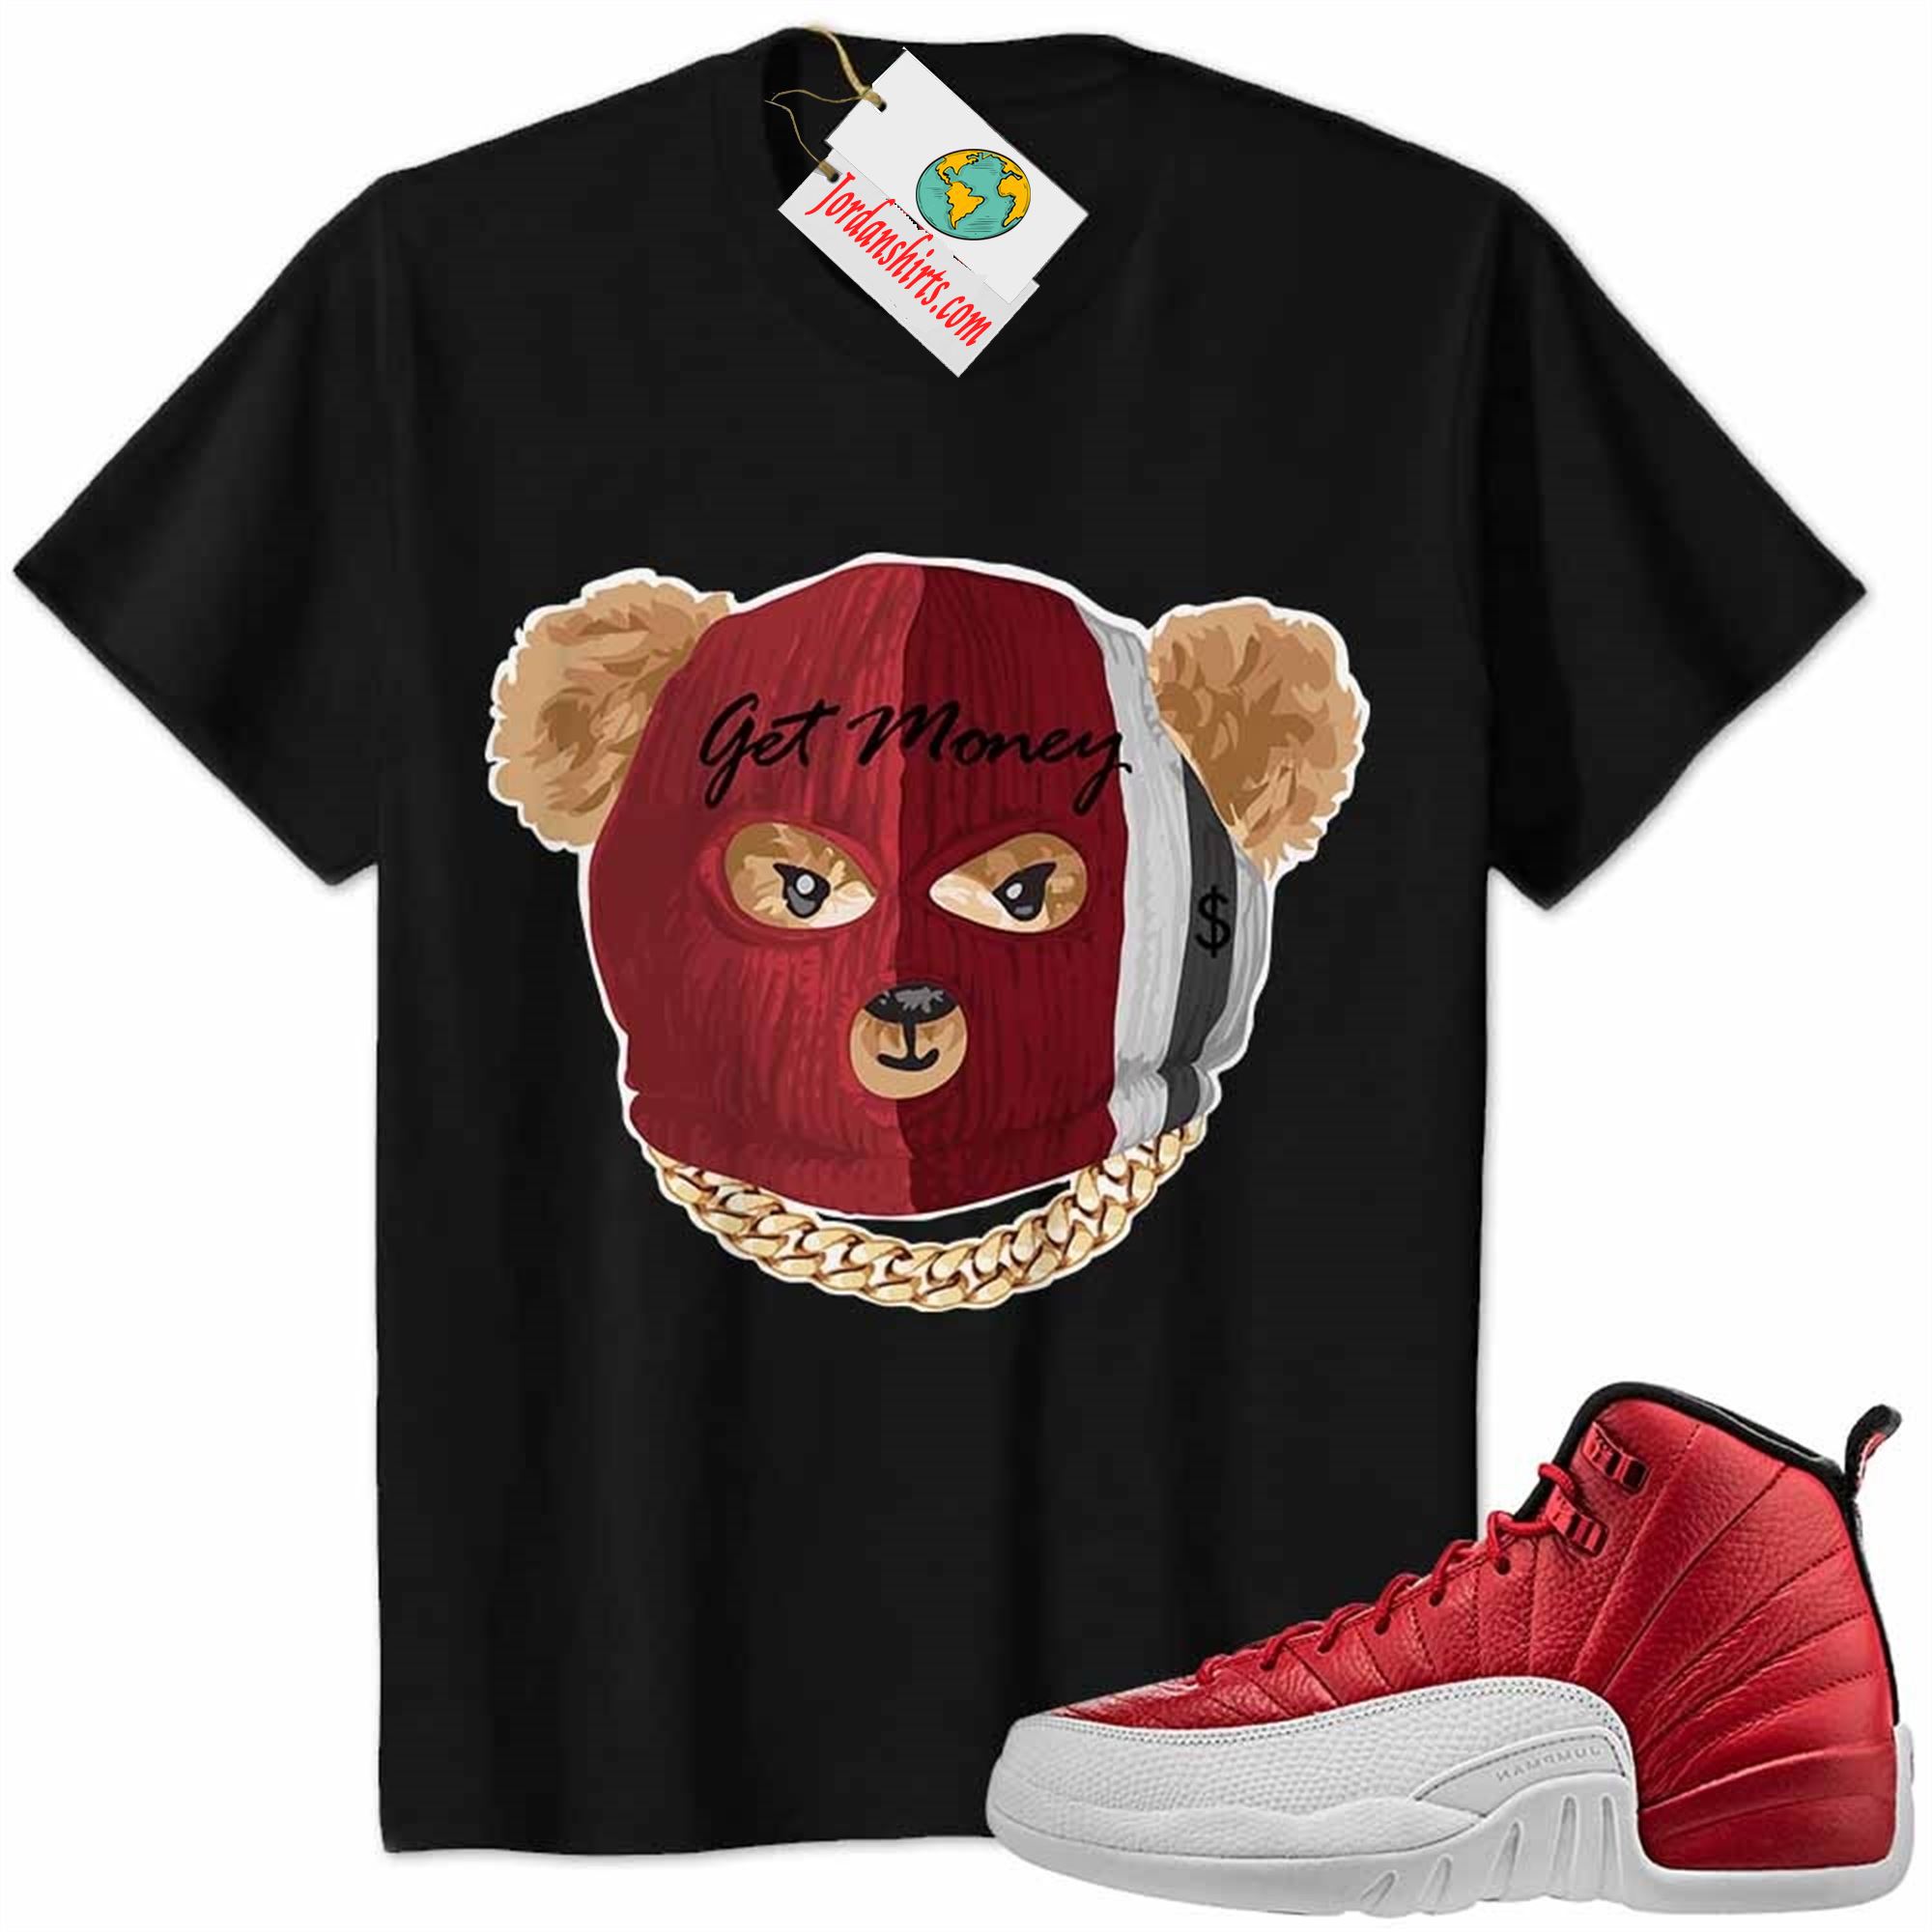 Jordan 12 Shirt, Robber Teddy Get Money Ski Mask Black Air Jordan 12 Gym Red 12s Plus Size Up To 5xl